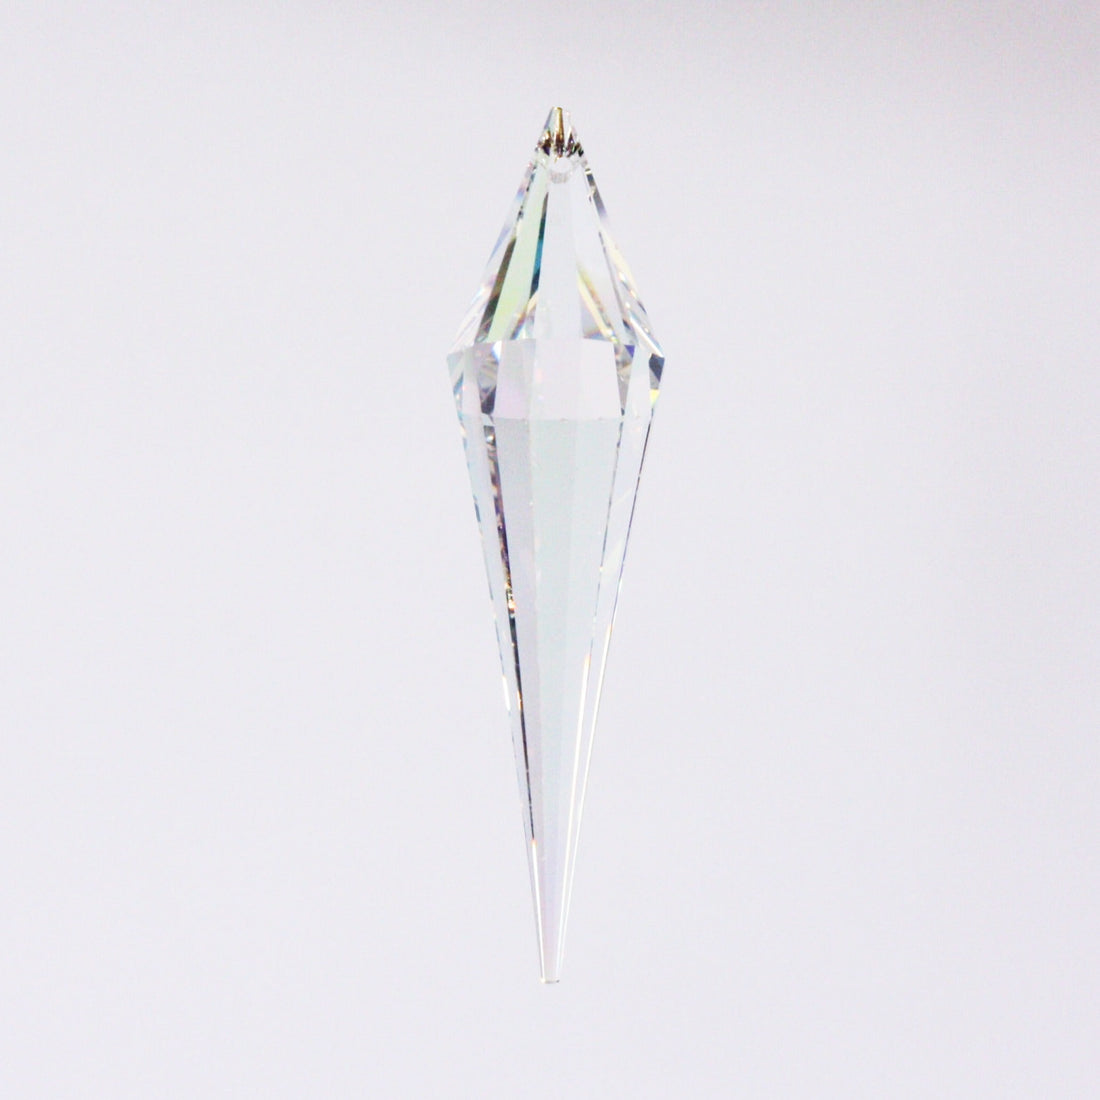 Swarovski Strass®crystalcolored Cone Prism Chandelierparts